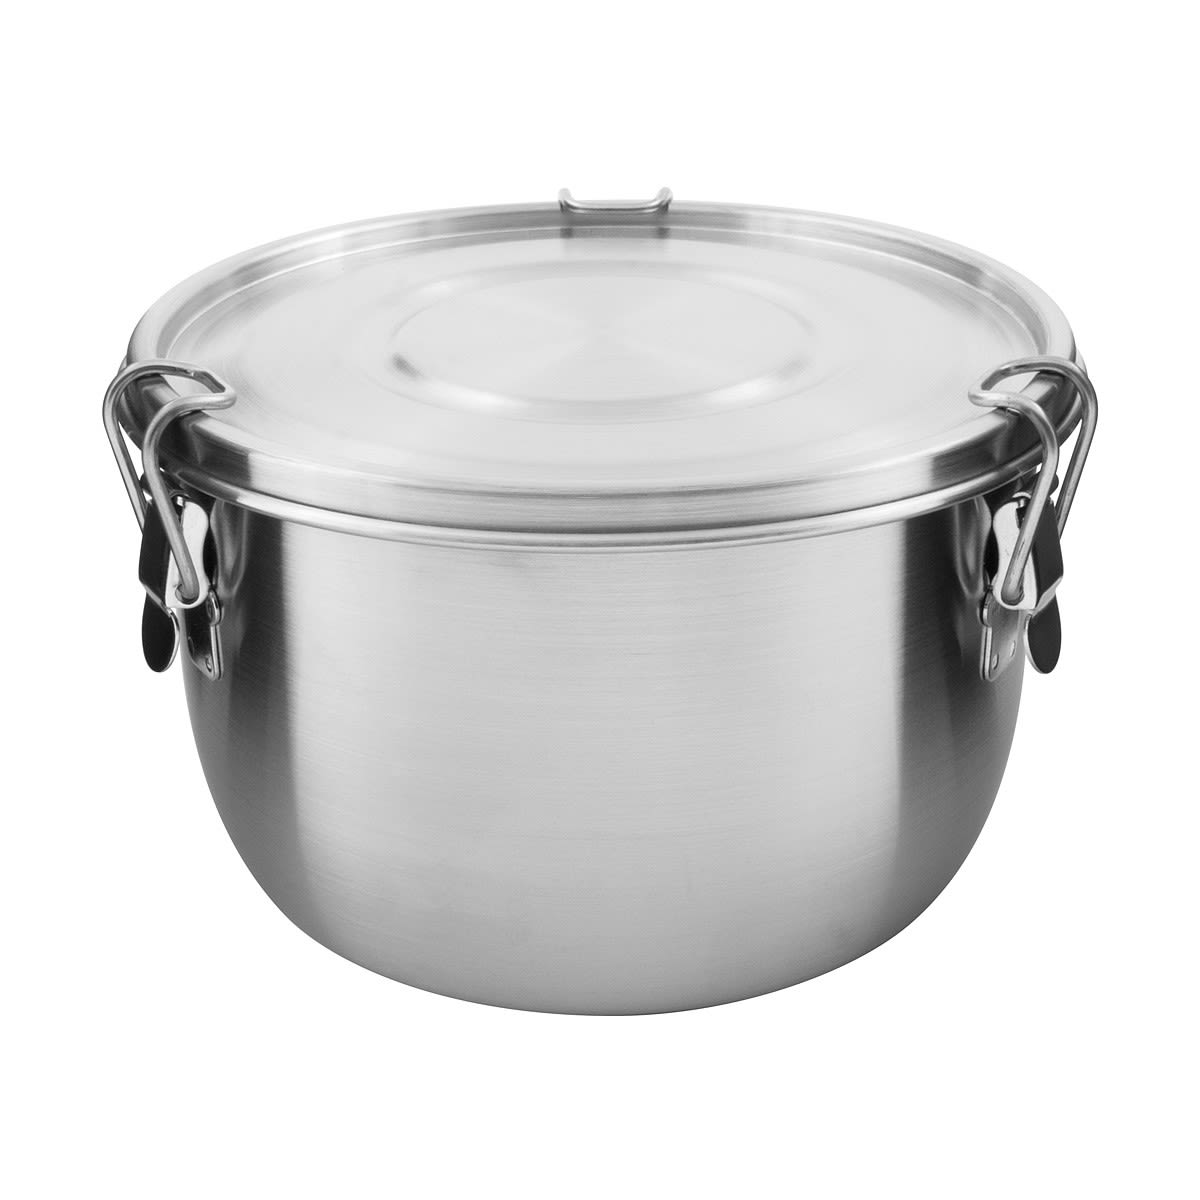 Tatonka Foodcontainer 1-0L Grau- Geschirr und Besteck- Grsse 1-0l - Farbe Silver